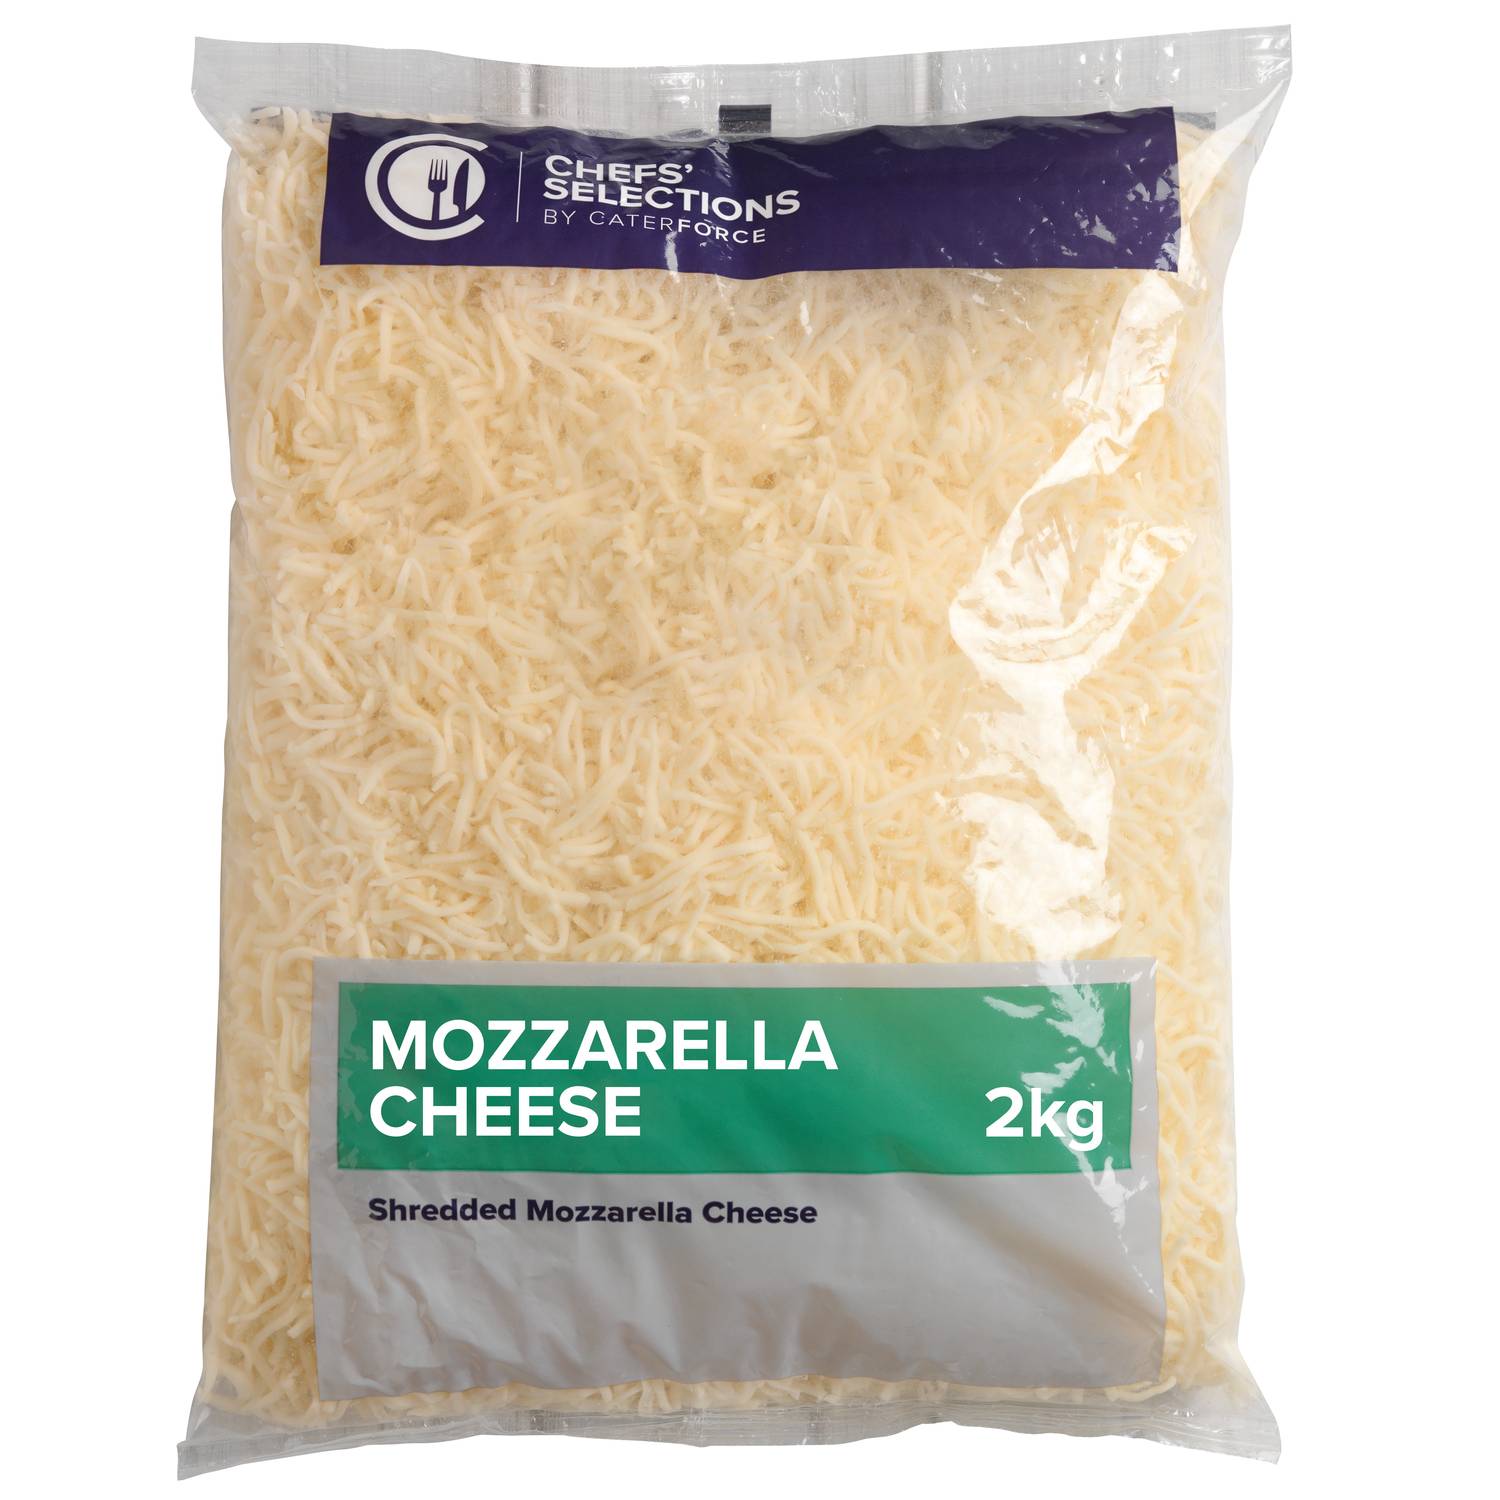 Chefs’ Selections Mozzarella Cheese (6 x 2kg)